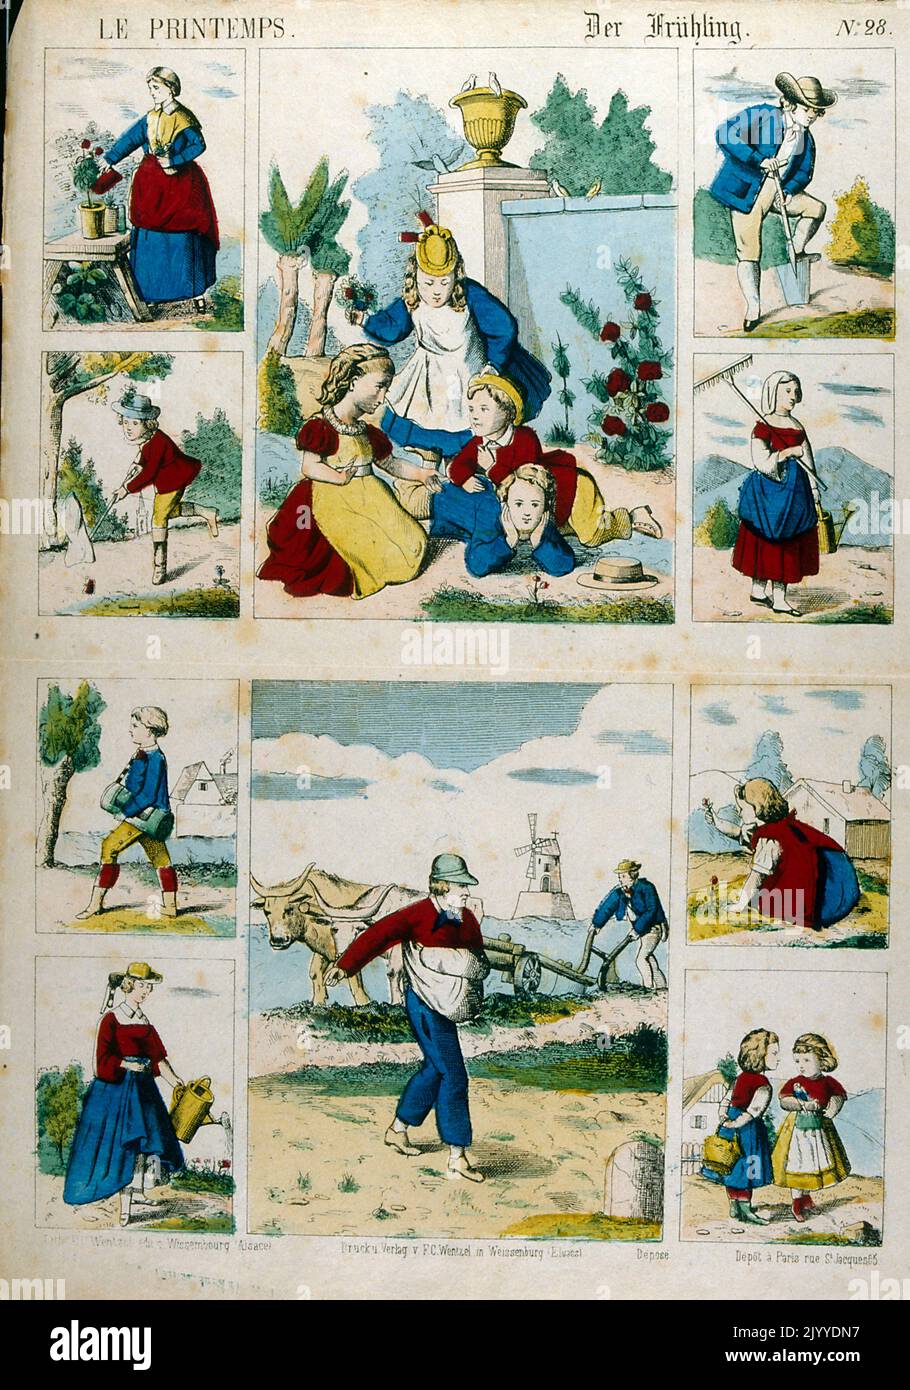 Coloured Illustration entitled 'Springtime' depicting German children in rural settings. Stock Photo